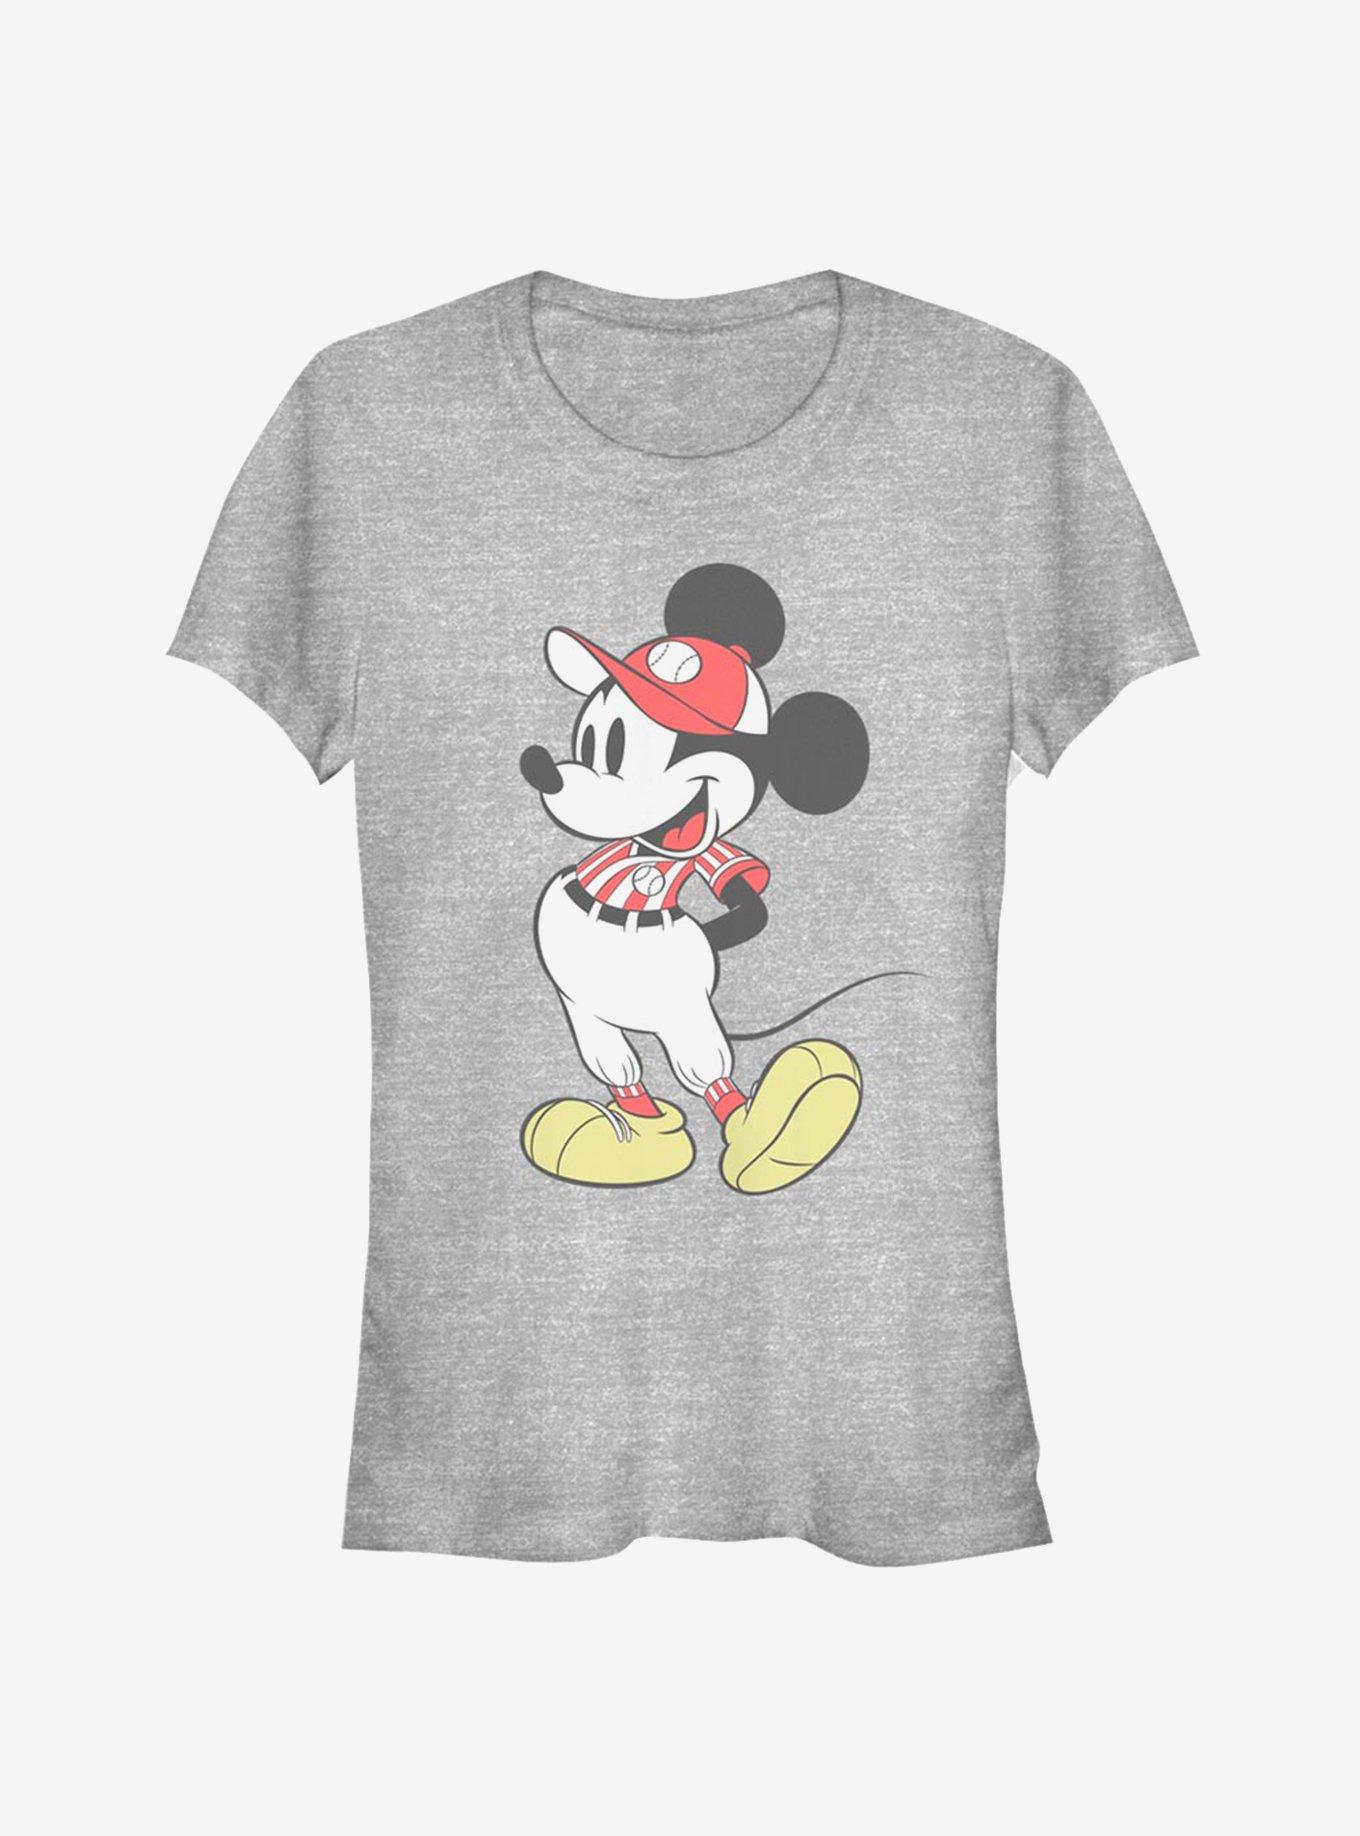 Disney Mickey Mouse Baseball Classic Girls T-Shirt